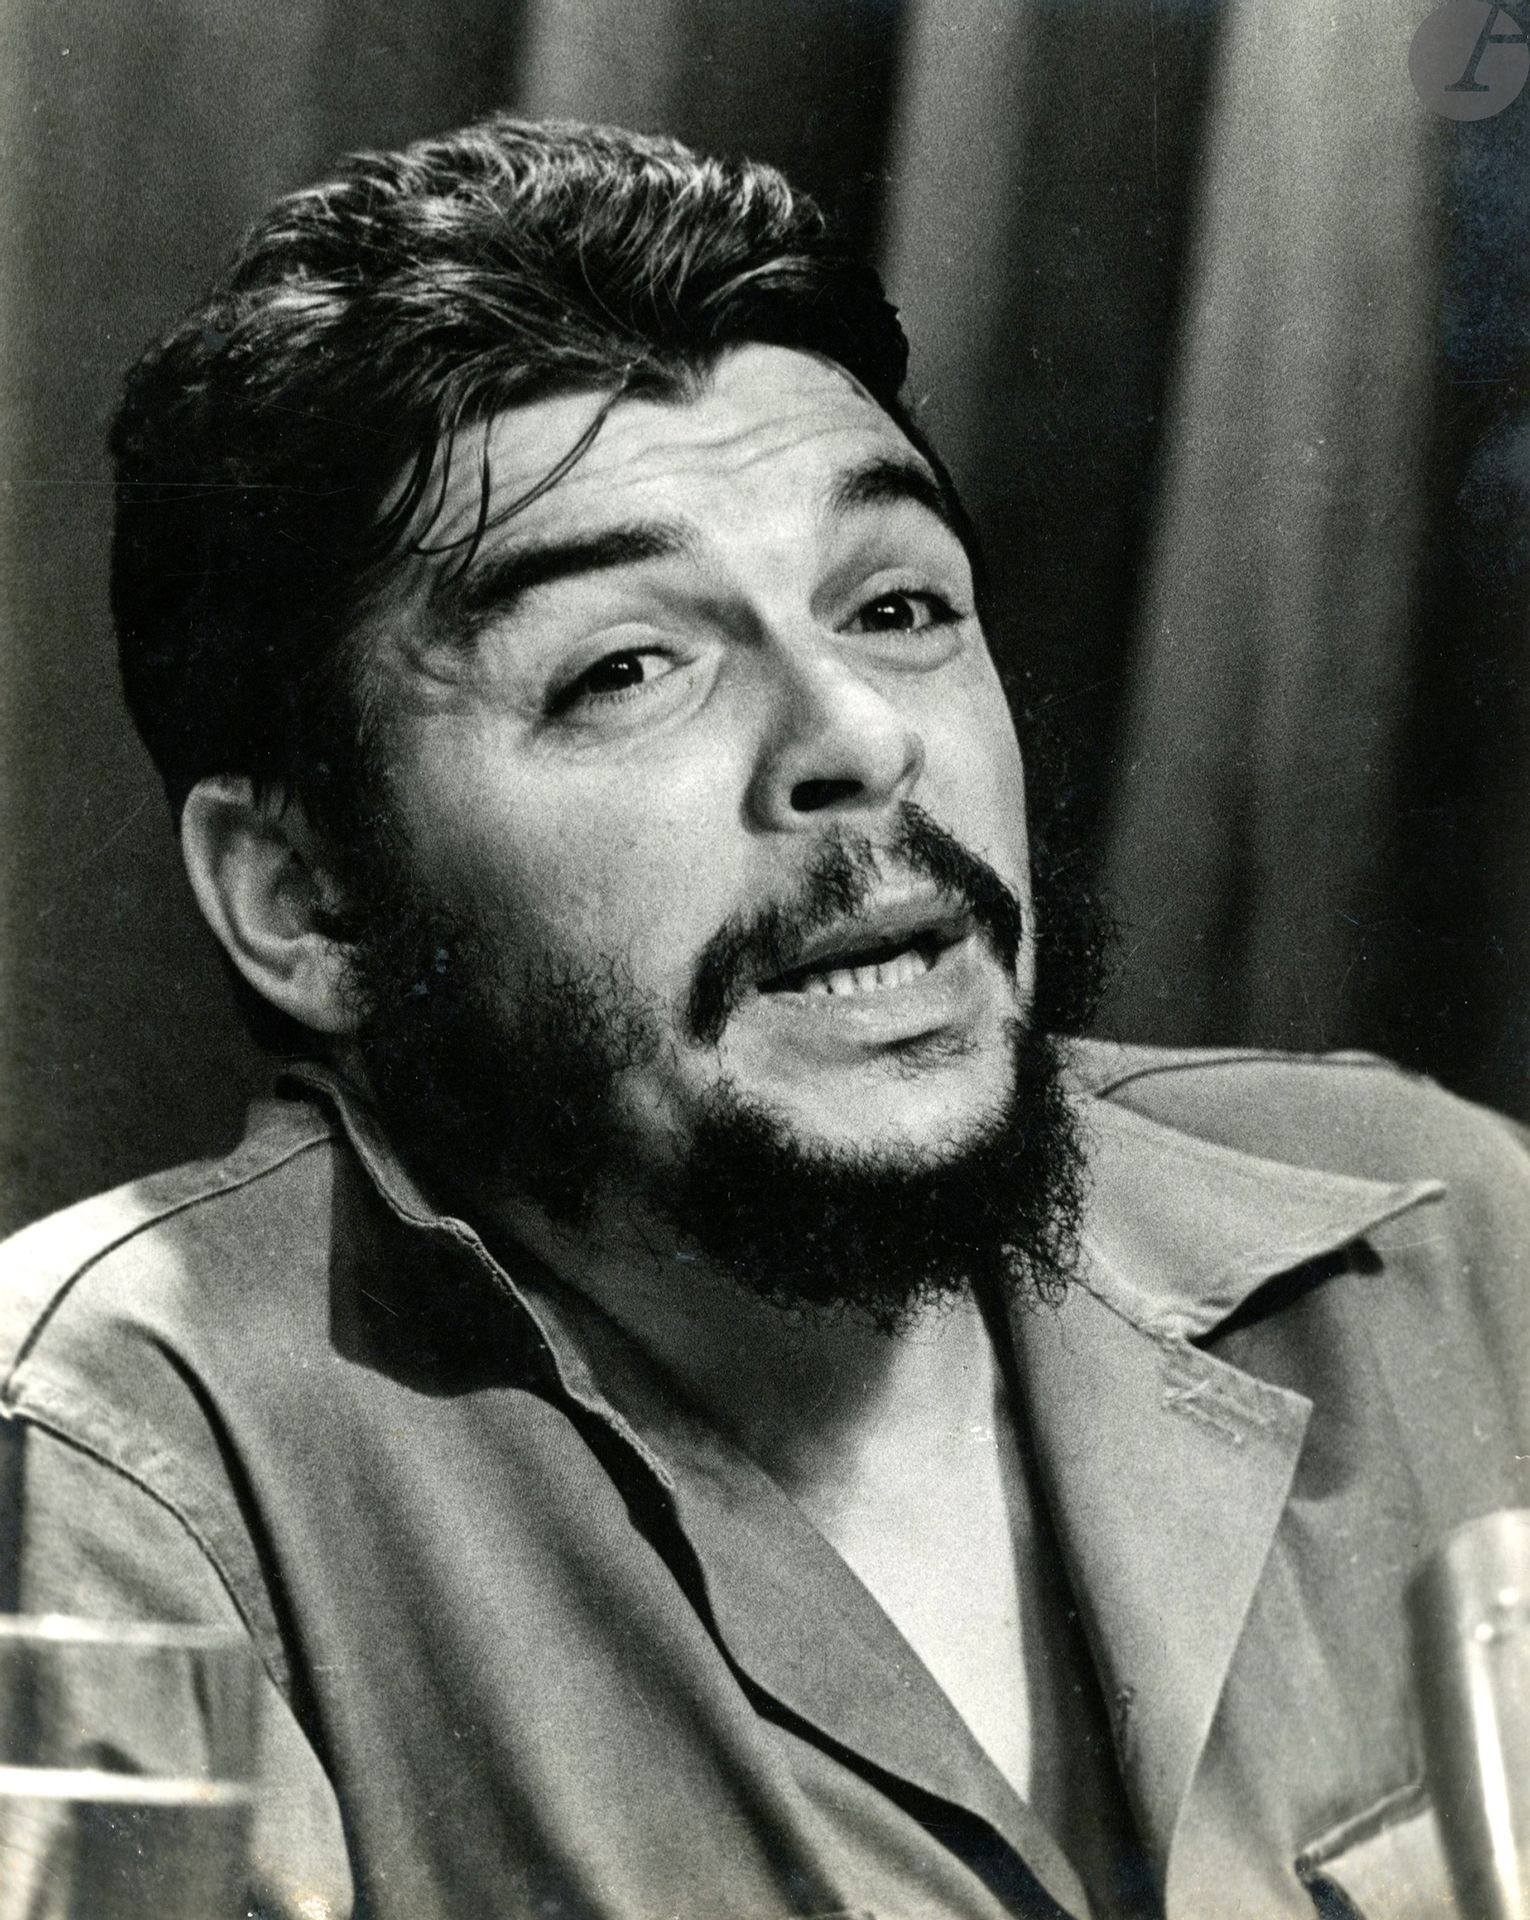 Artwork by Alberto Korda, Che Guevara., Made of Vintage silver print